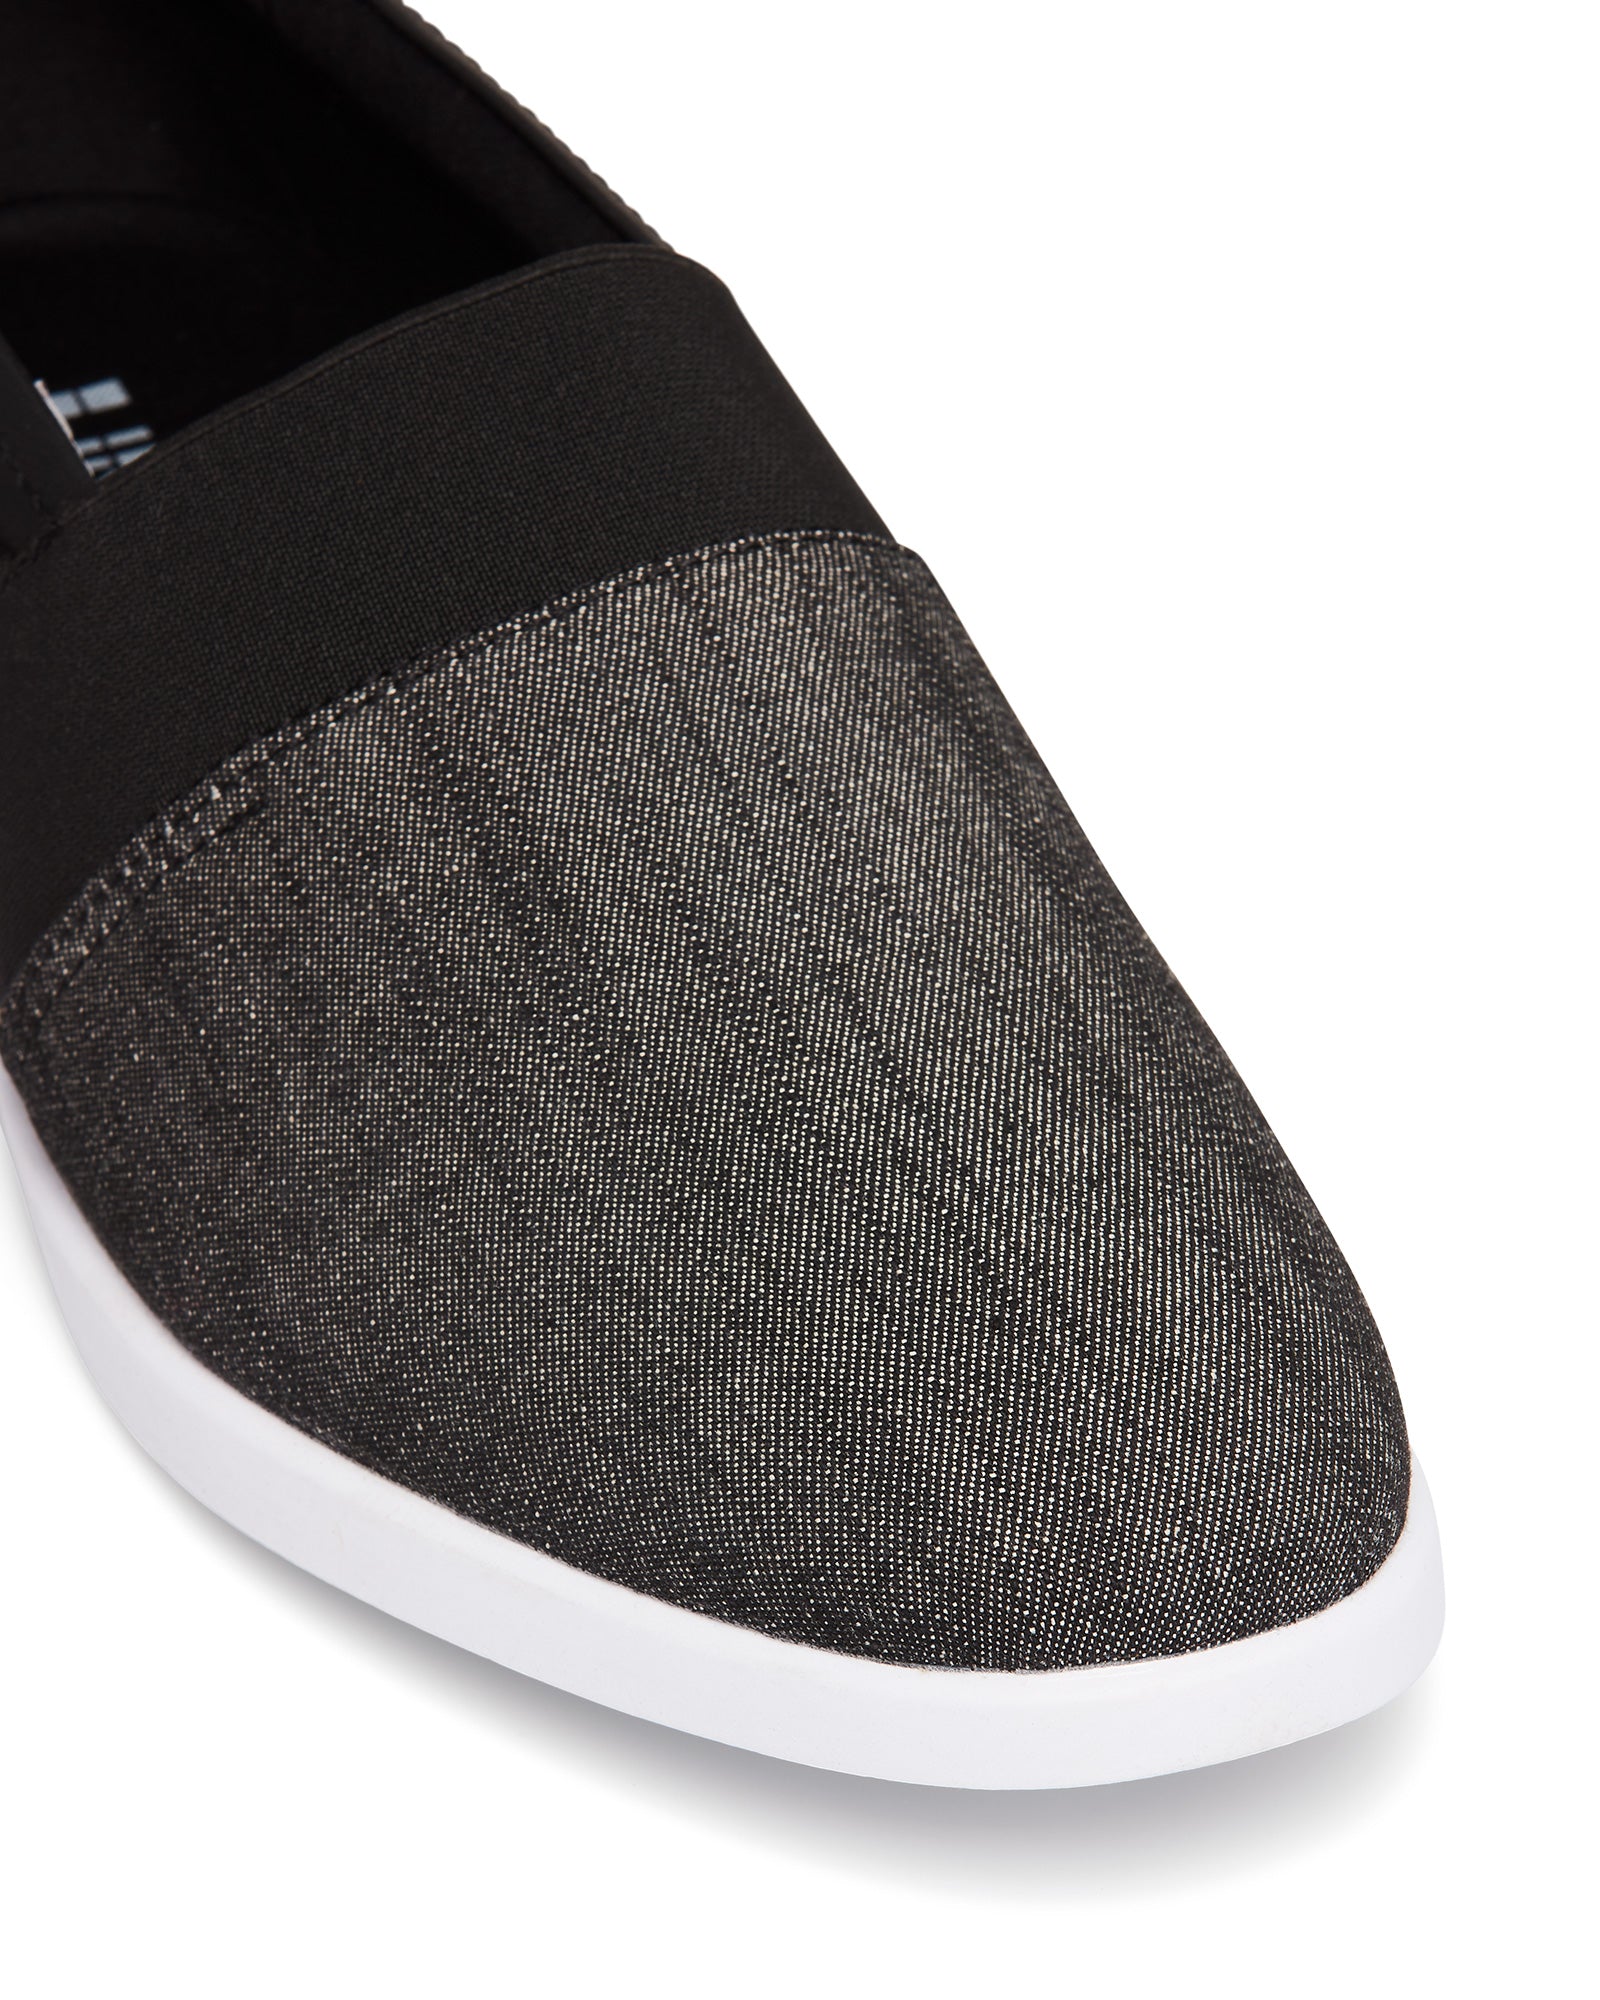 Uncut Shoes Bondi Black | Men's Sneaker | Slip On | Elastic | Canvas 